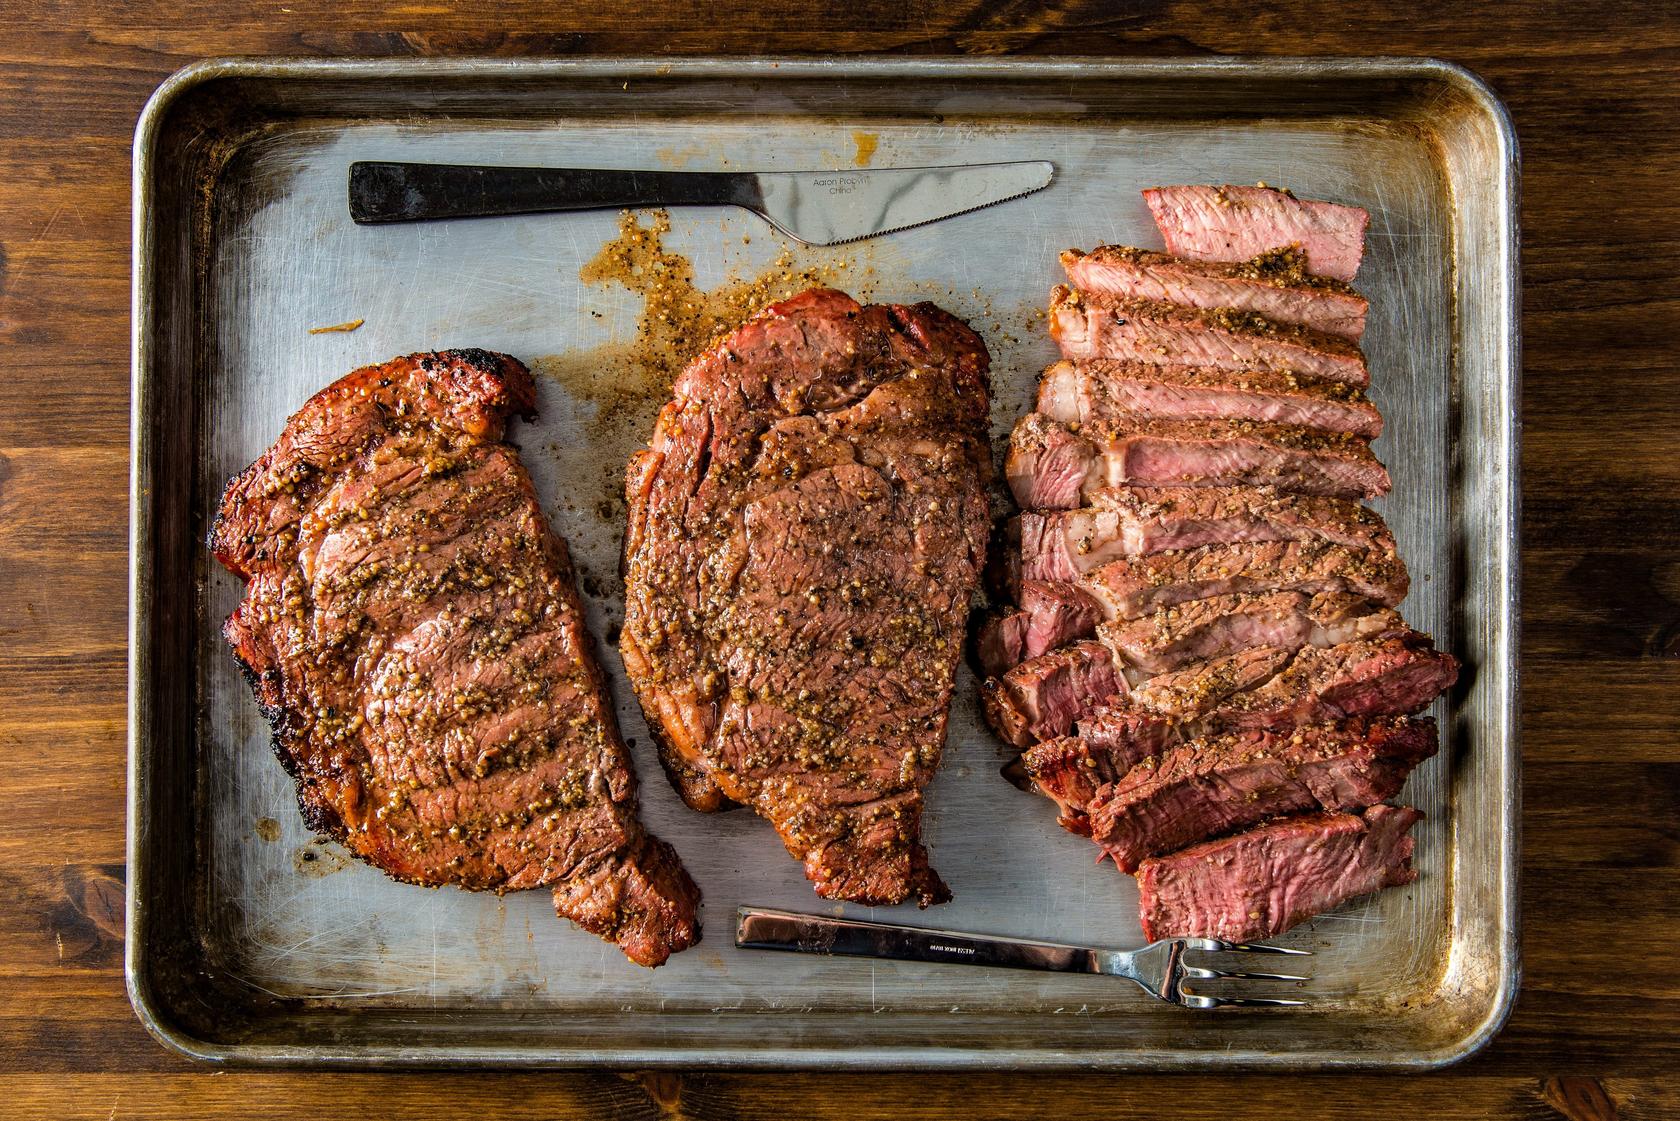 Grilled Ribeye steaks by Doug Scheiding